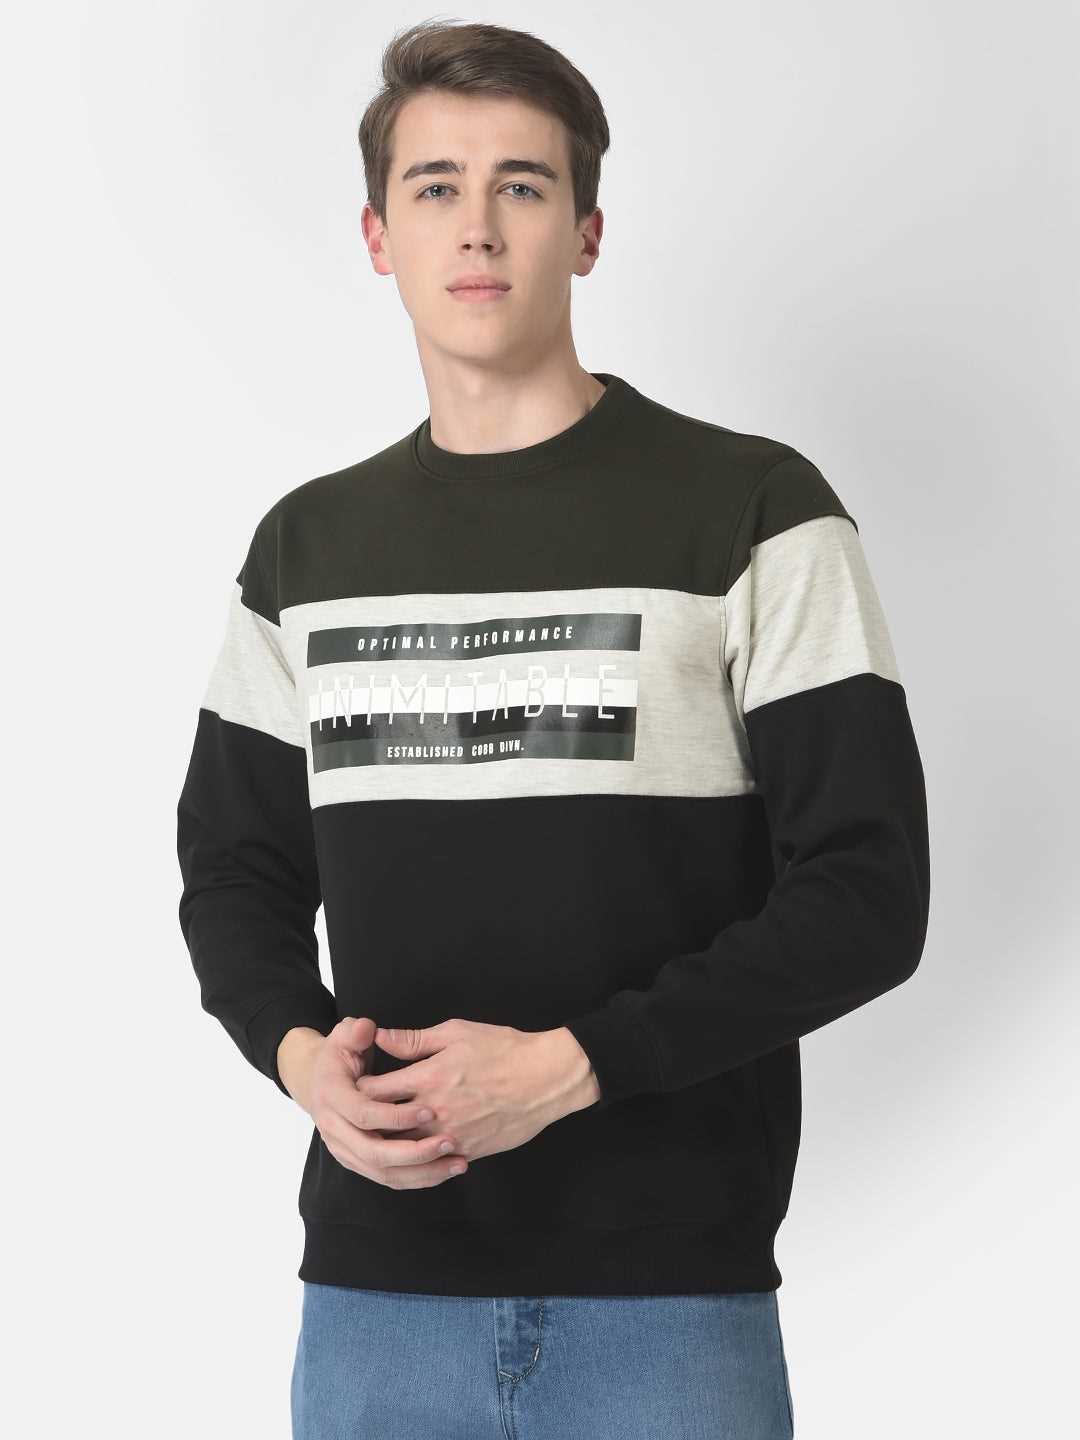 Cobb Black Printed Round Neck Sweatshirt Black